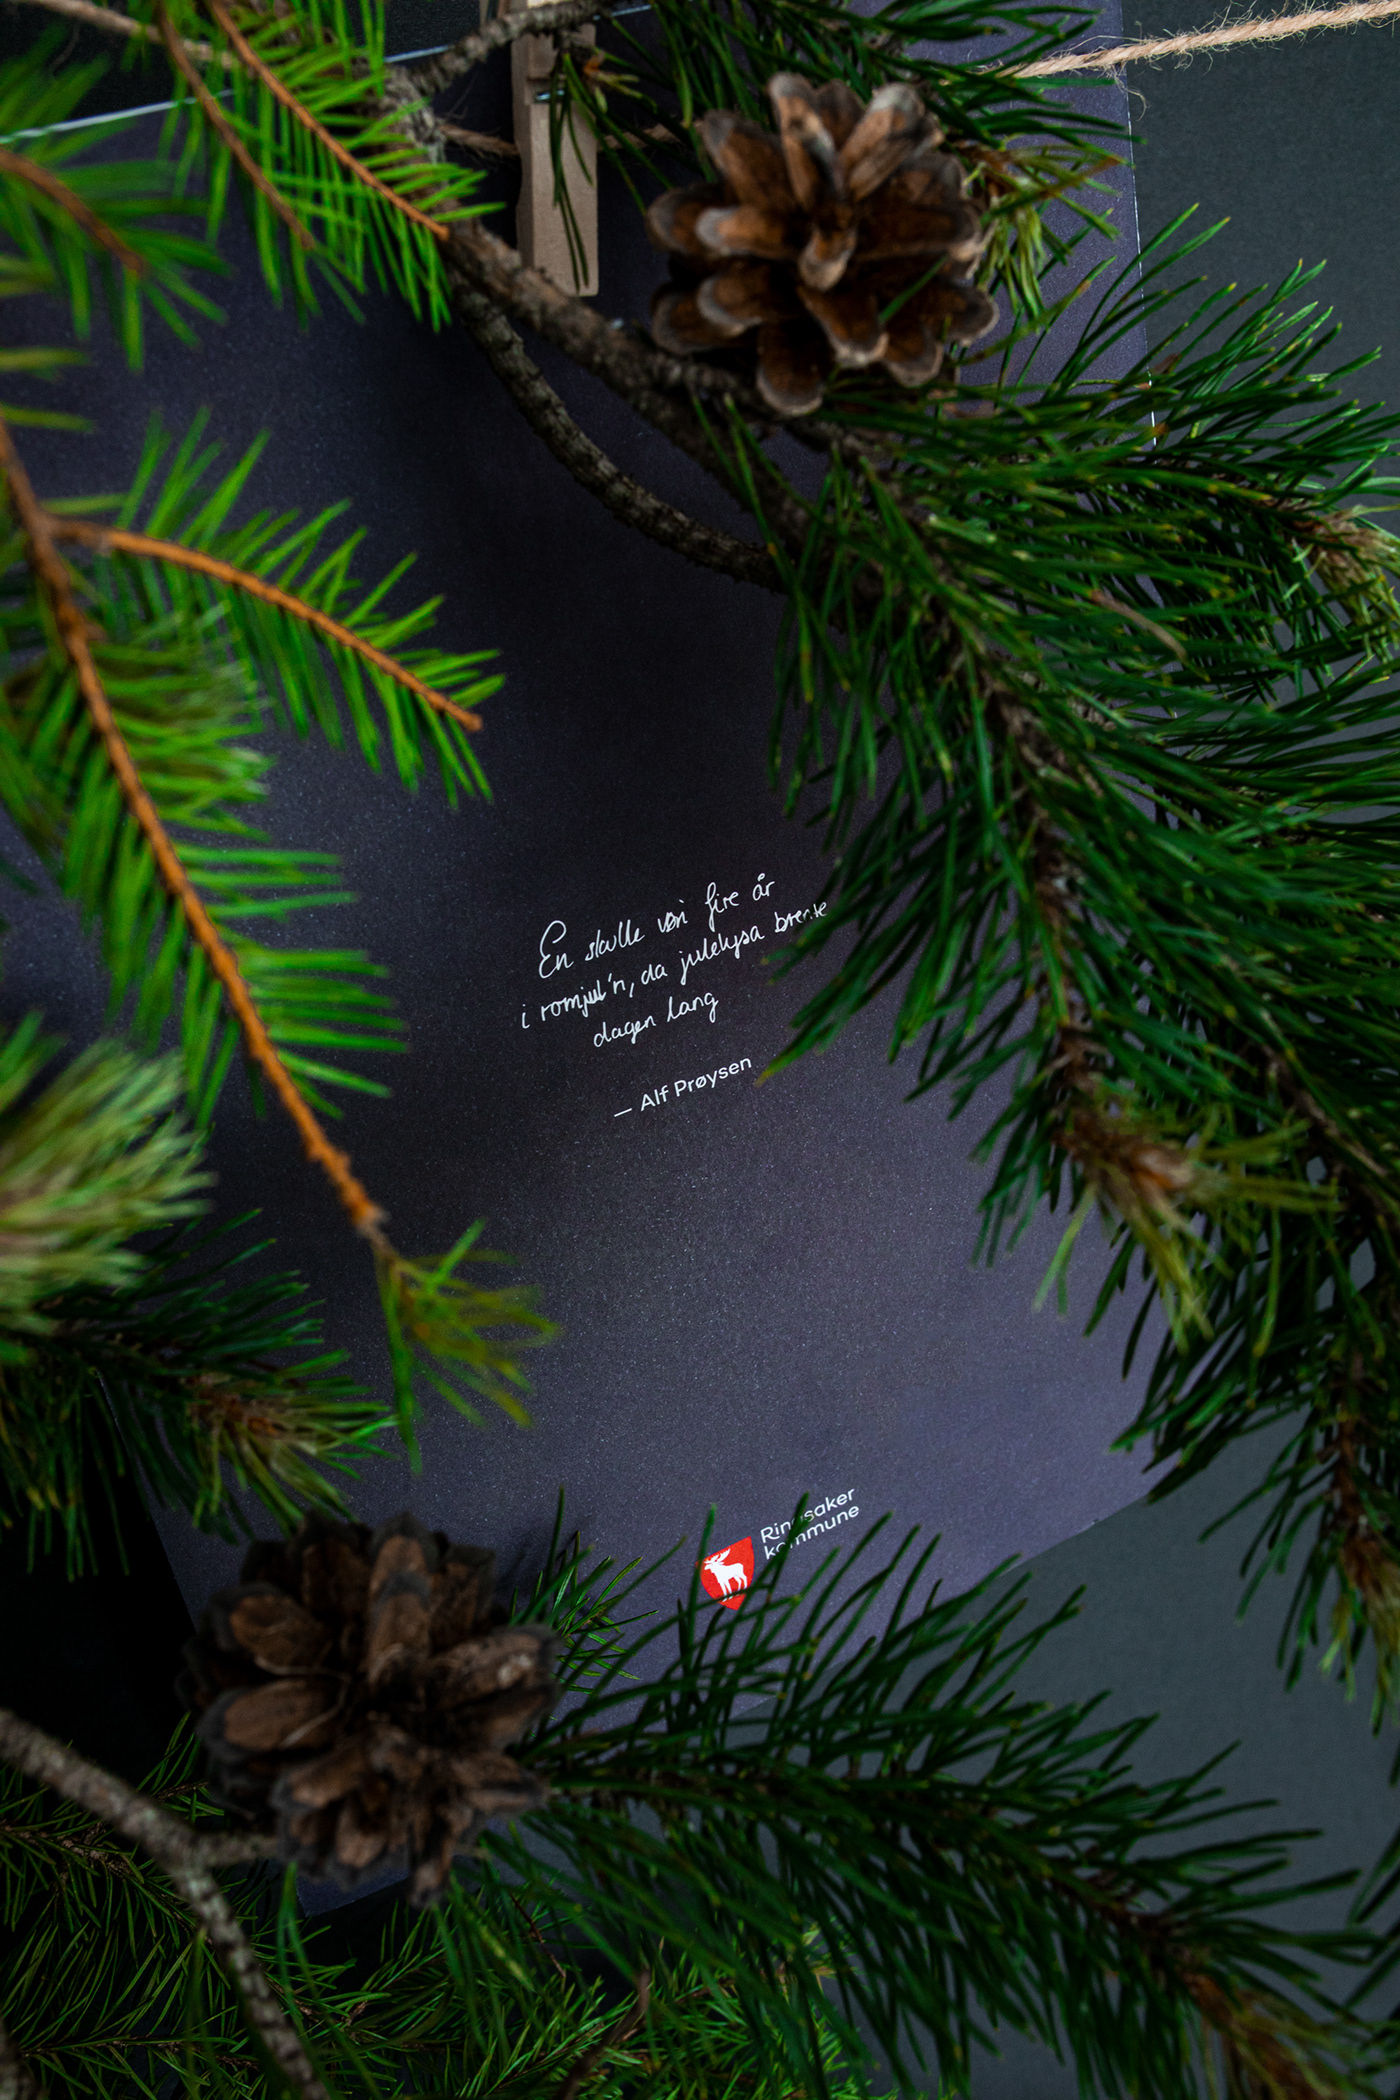 Adobe Portfolio Christmas Christmas magazine gold foil Hot Foil Editoral Design Redaksjonelt design art direction  Art Director Layout chrismas inspiration